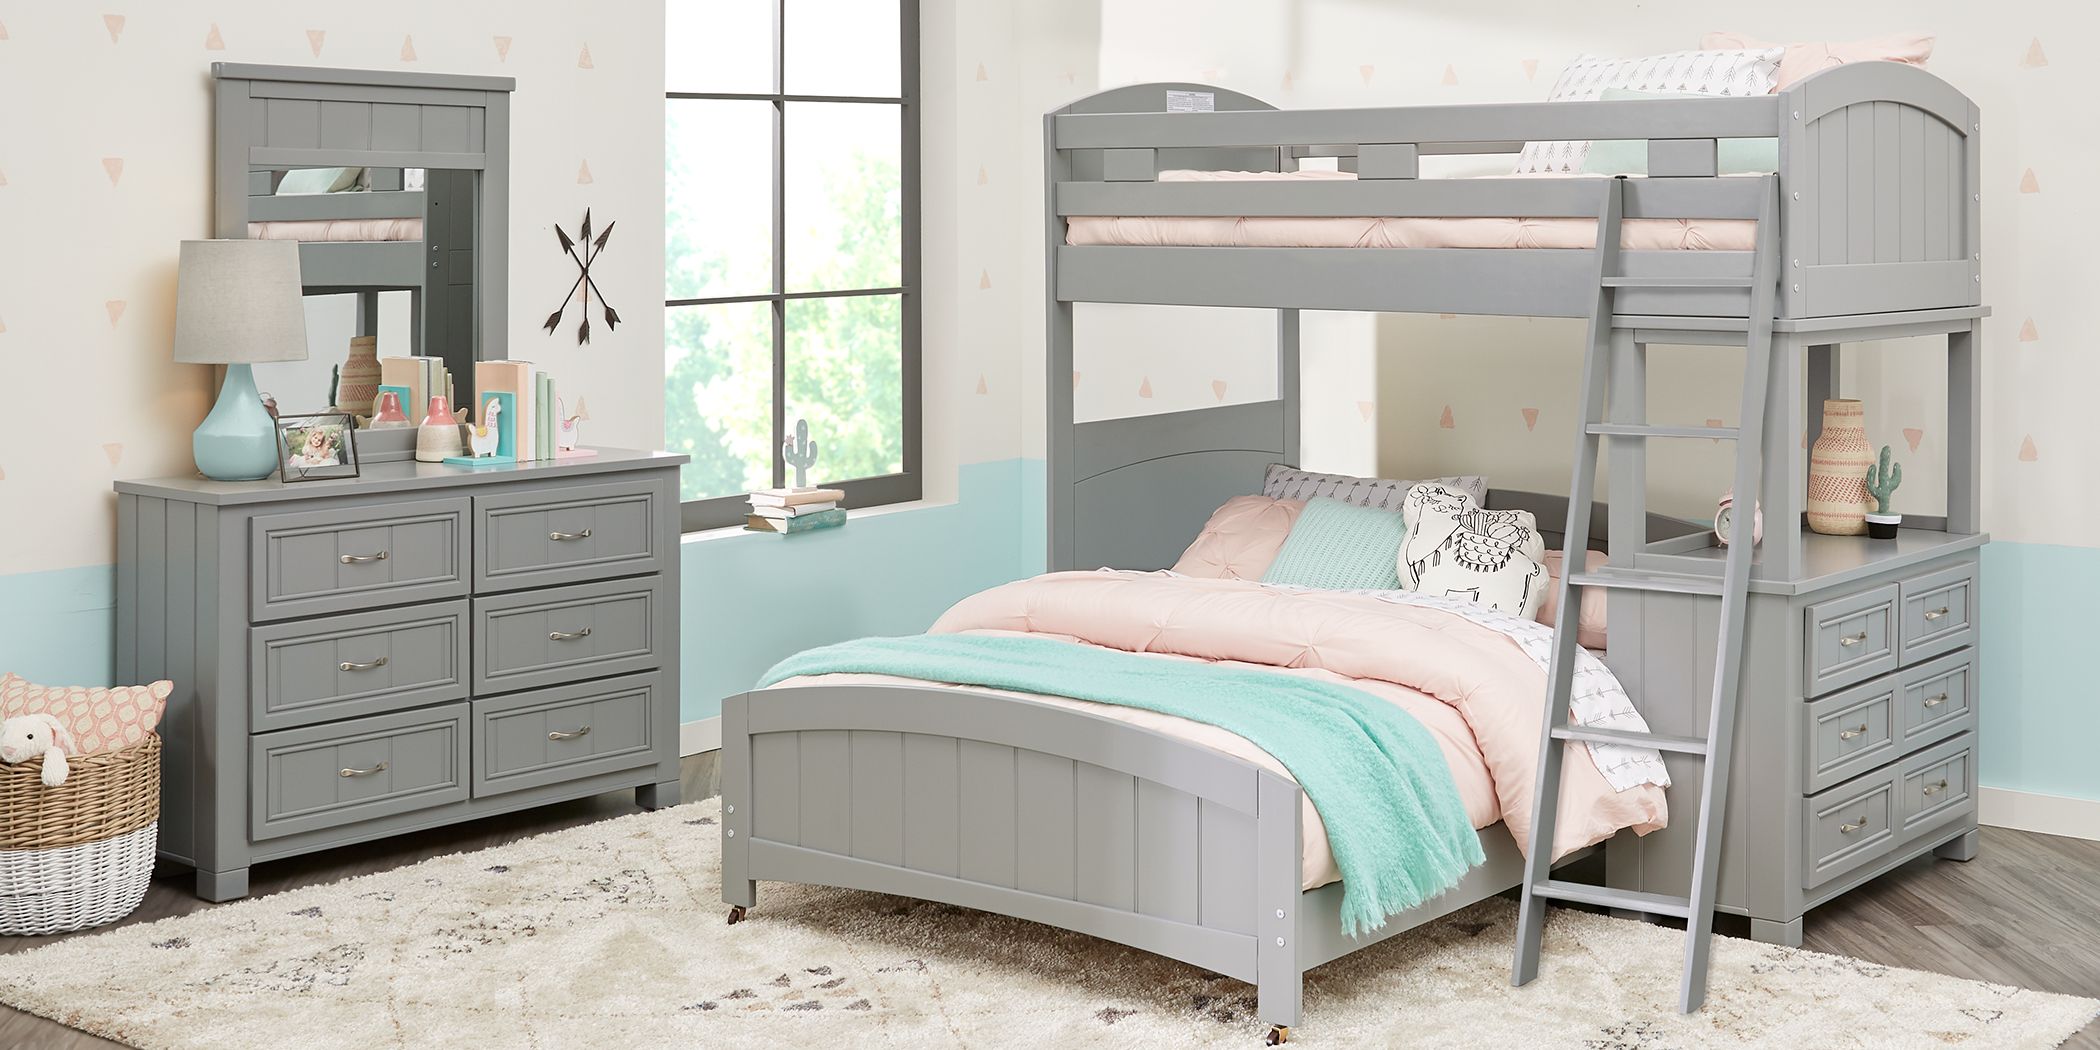 Bunk Beds With Dresser, Bunk Bed Sets With Dresser